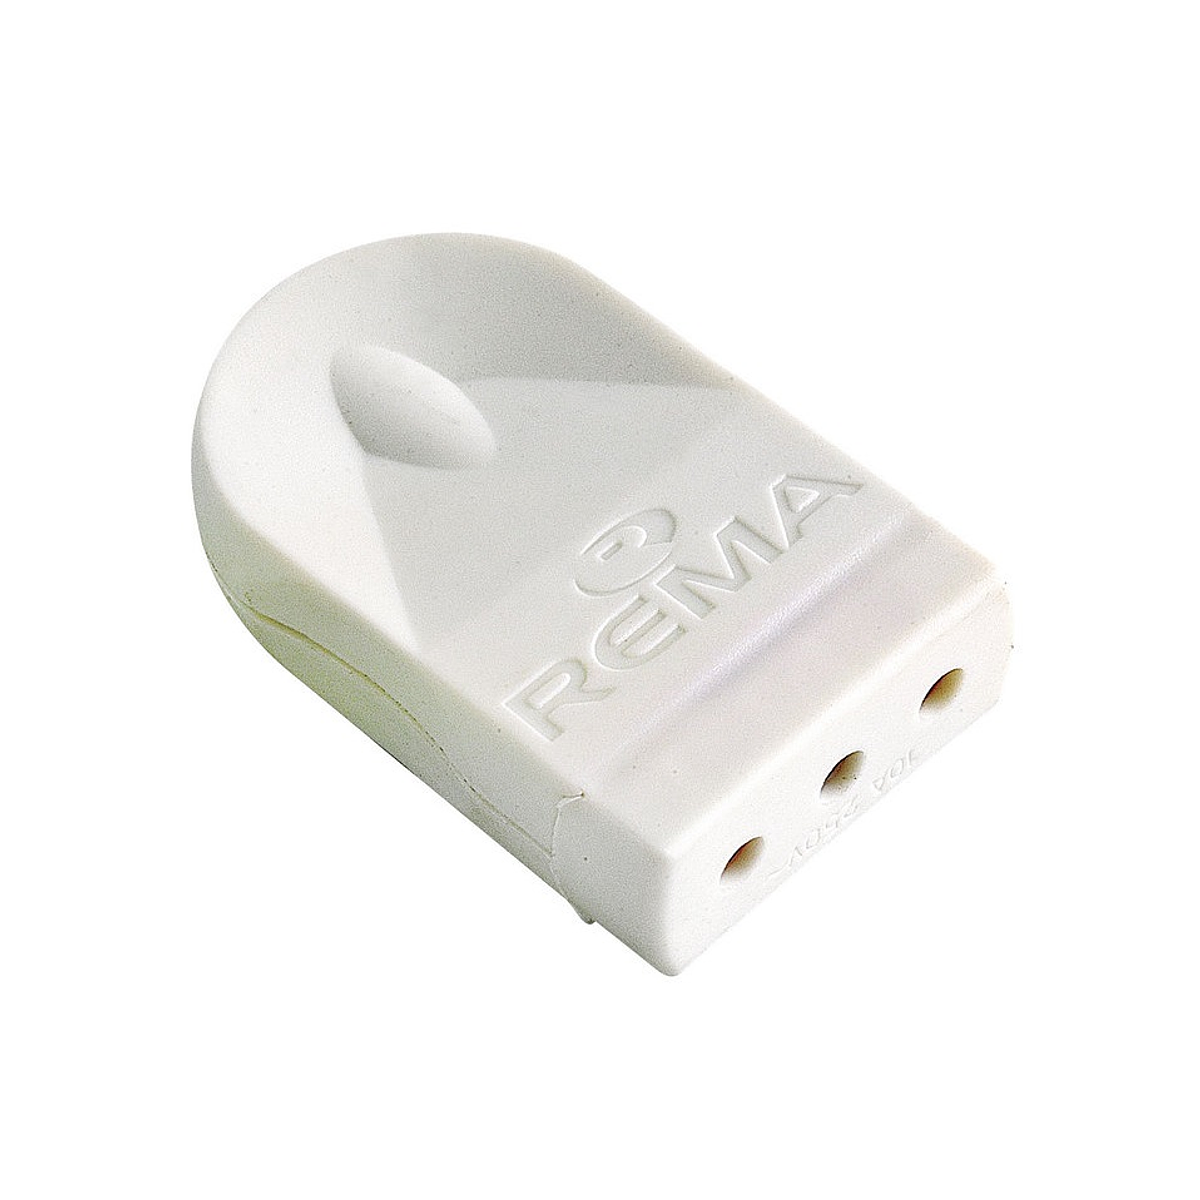 Ripley - ENCHUFE 2 USB 1,5A 5V BLANCO REMA